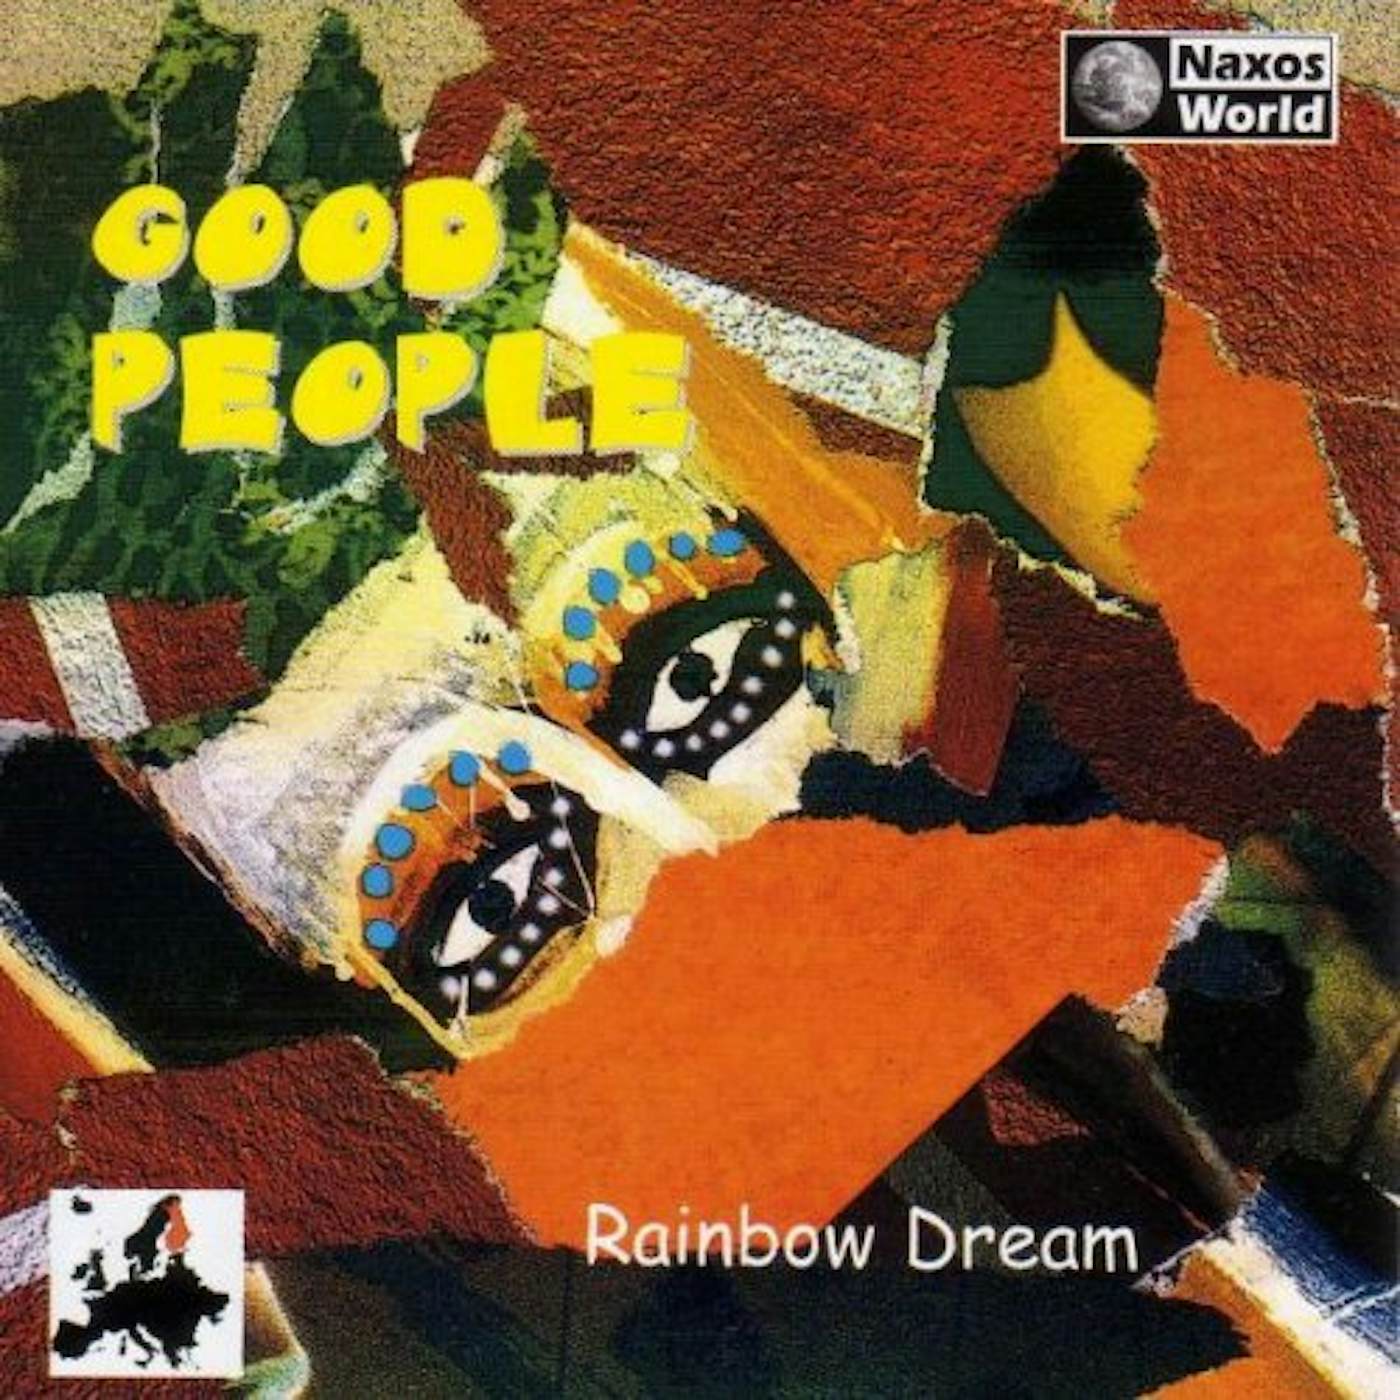 The Good People RAINBOW DREAM CD